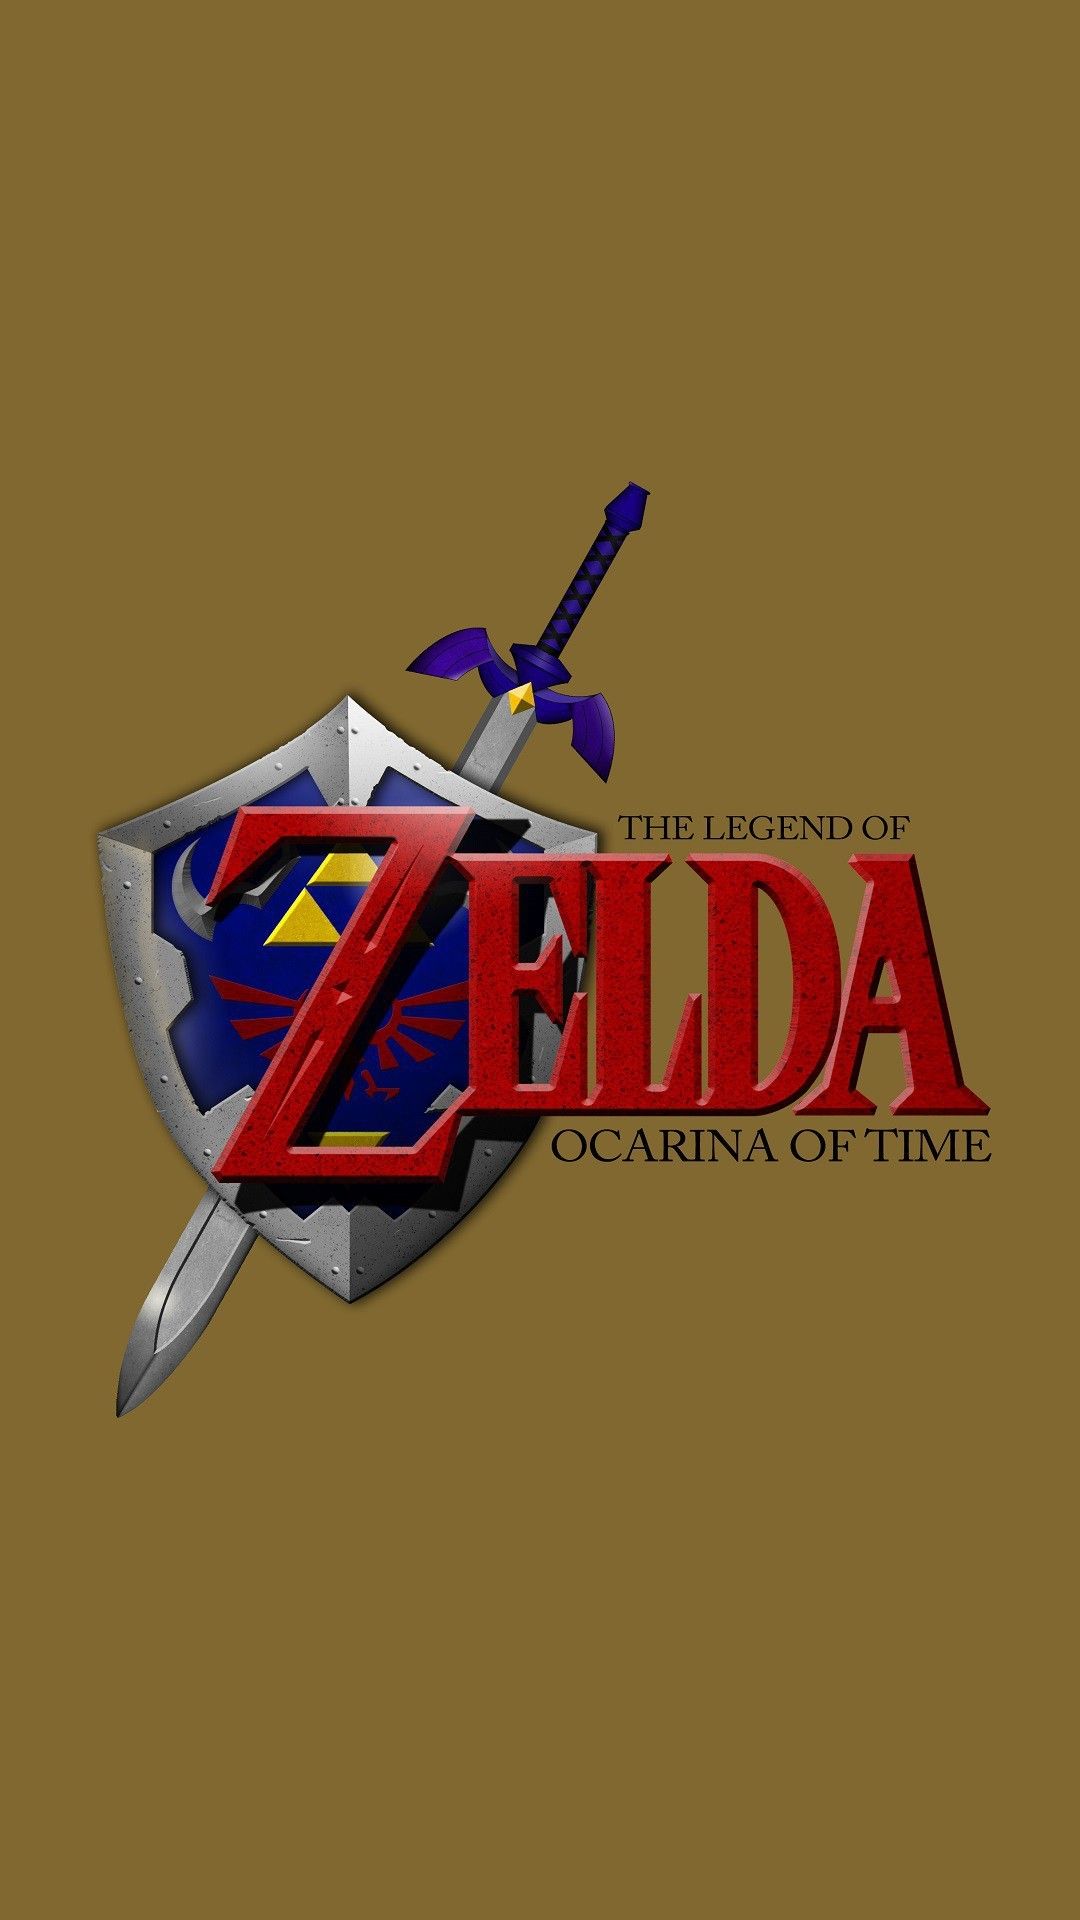 the legend of zelda ocarina of time game